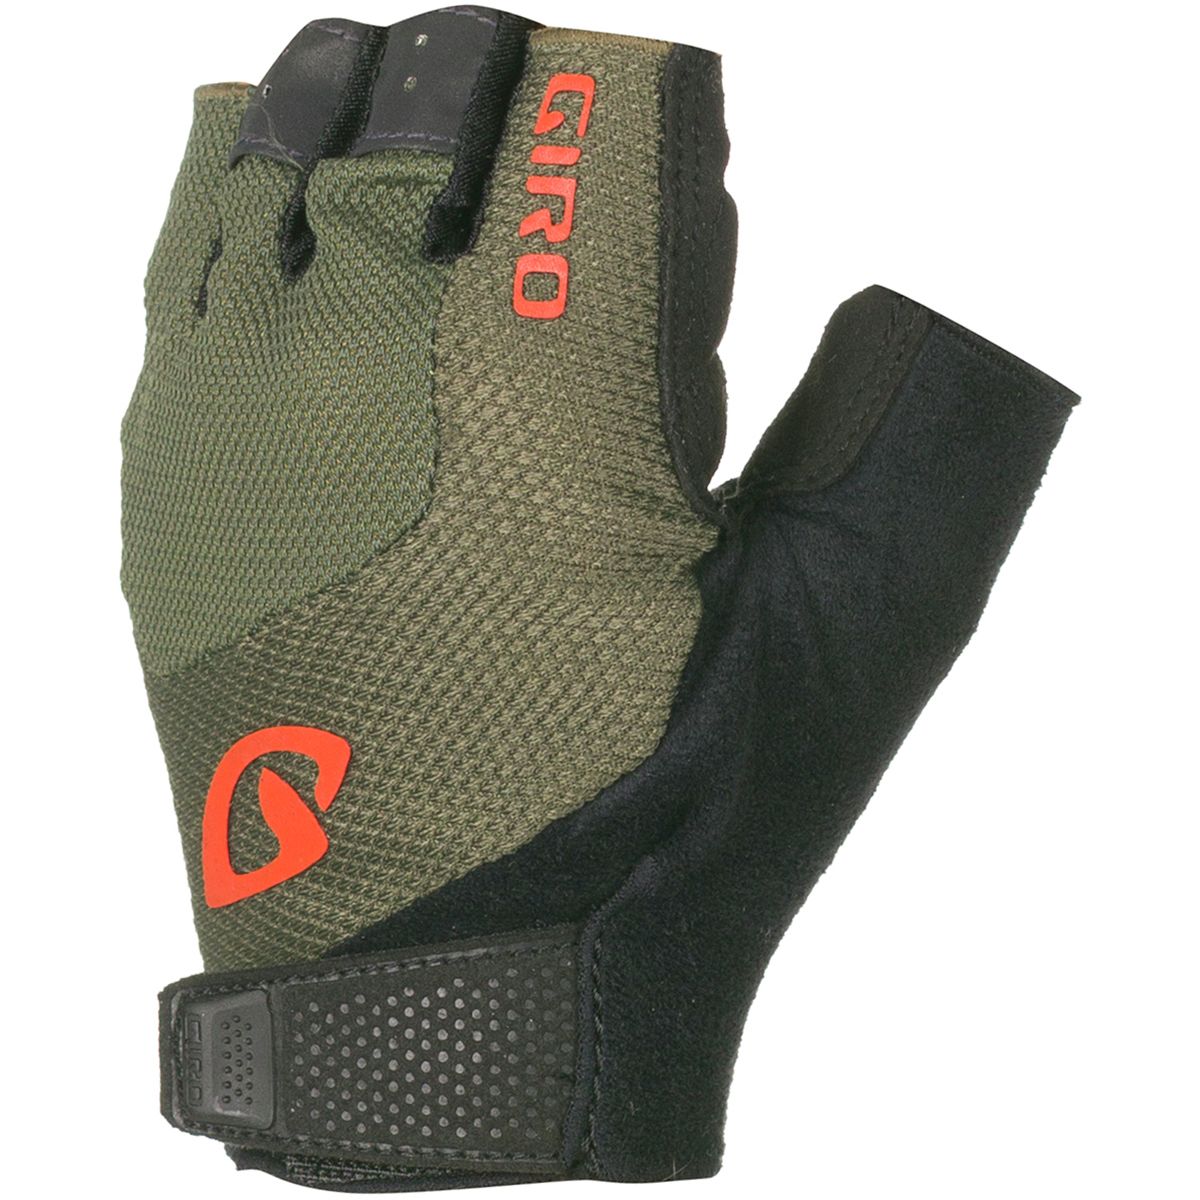 Giro Bravo Gel Studio Collection Glove - Men's